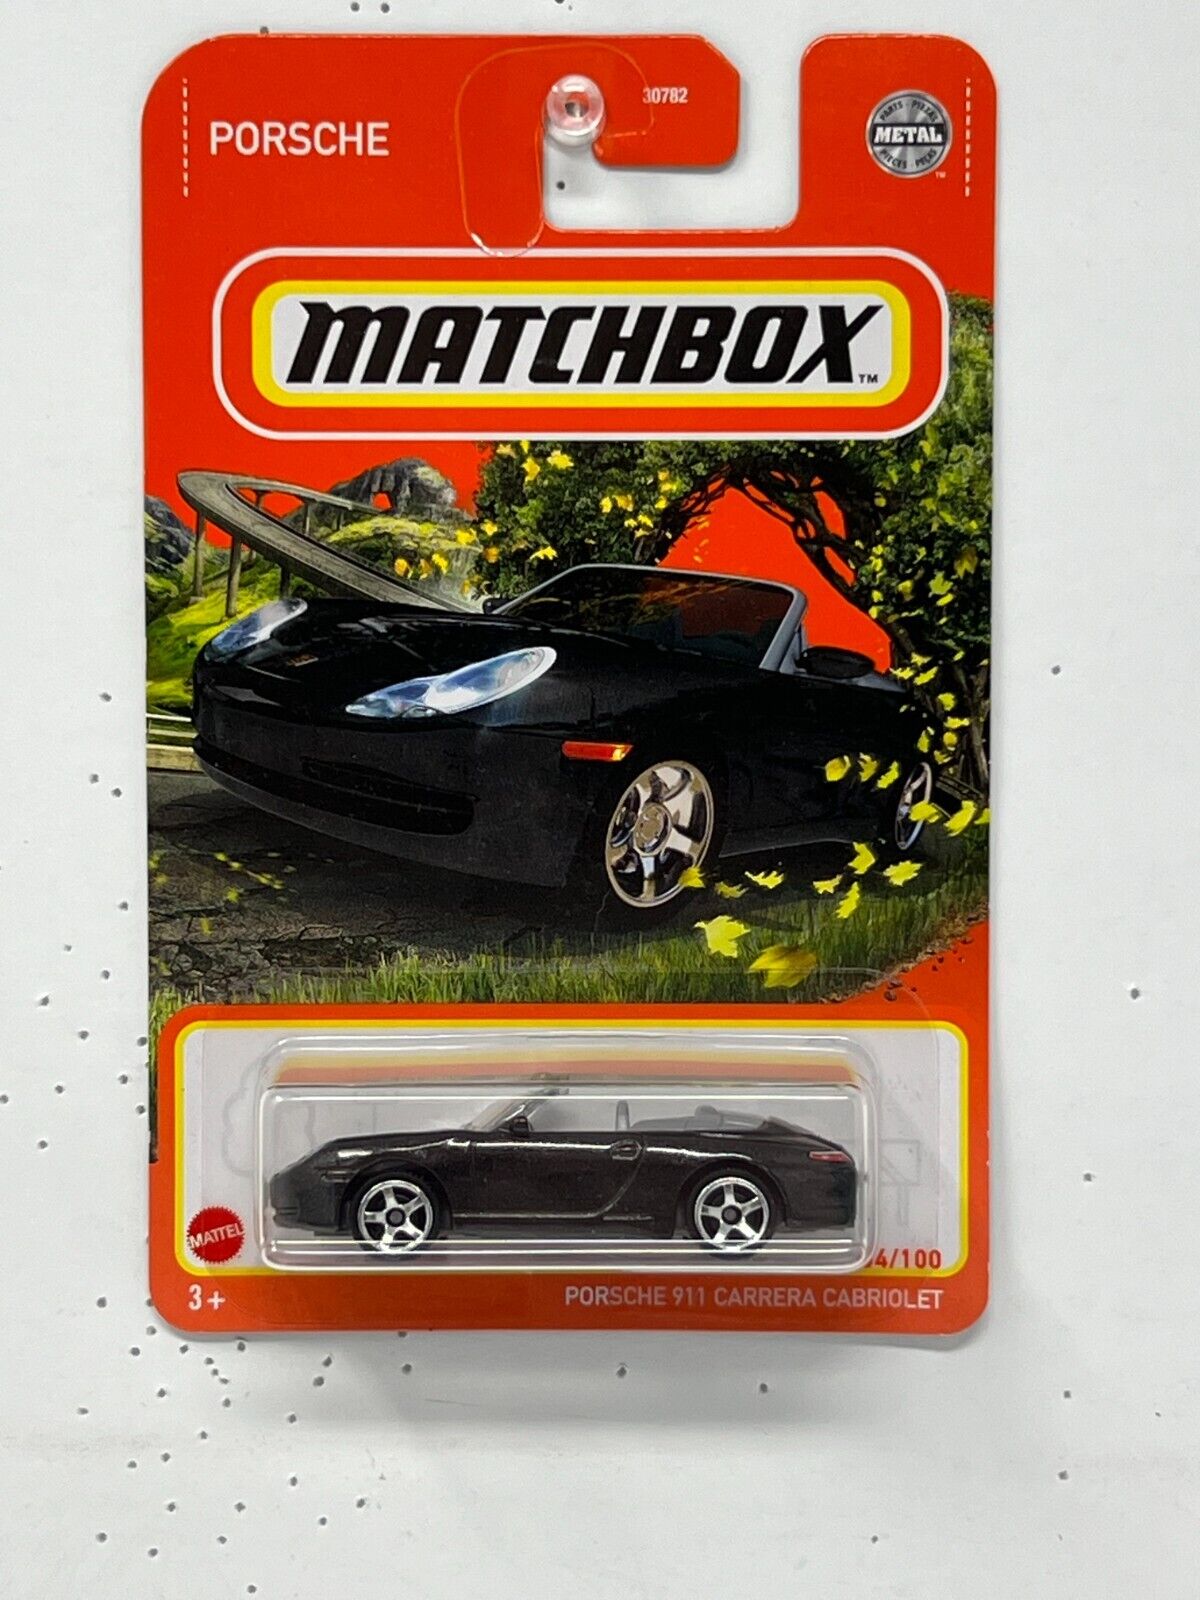 Matchbox Porsche 911 Carrera Cabriolet Black 1:64 Diecast